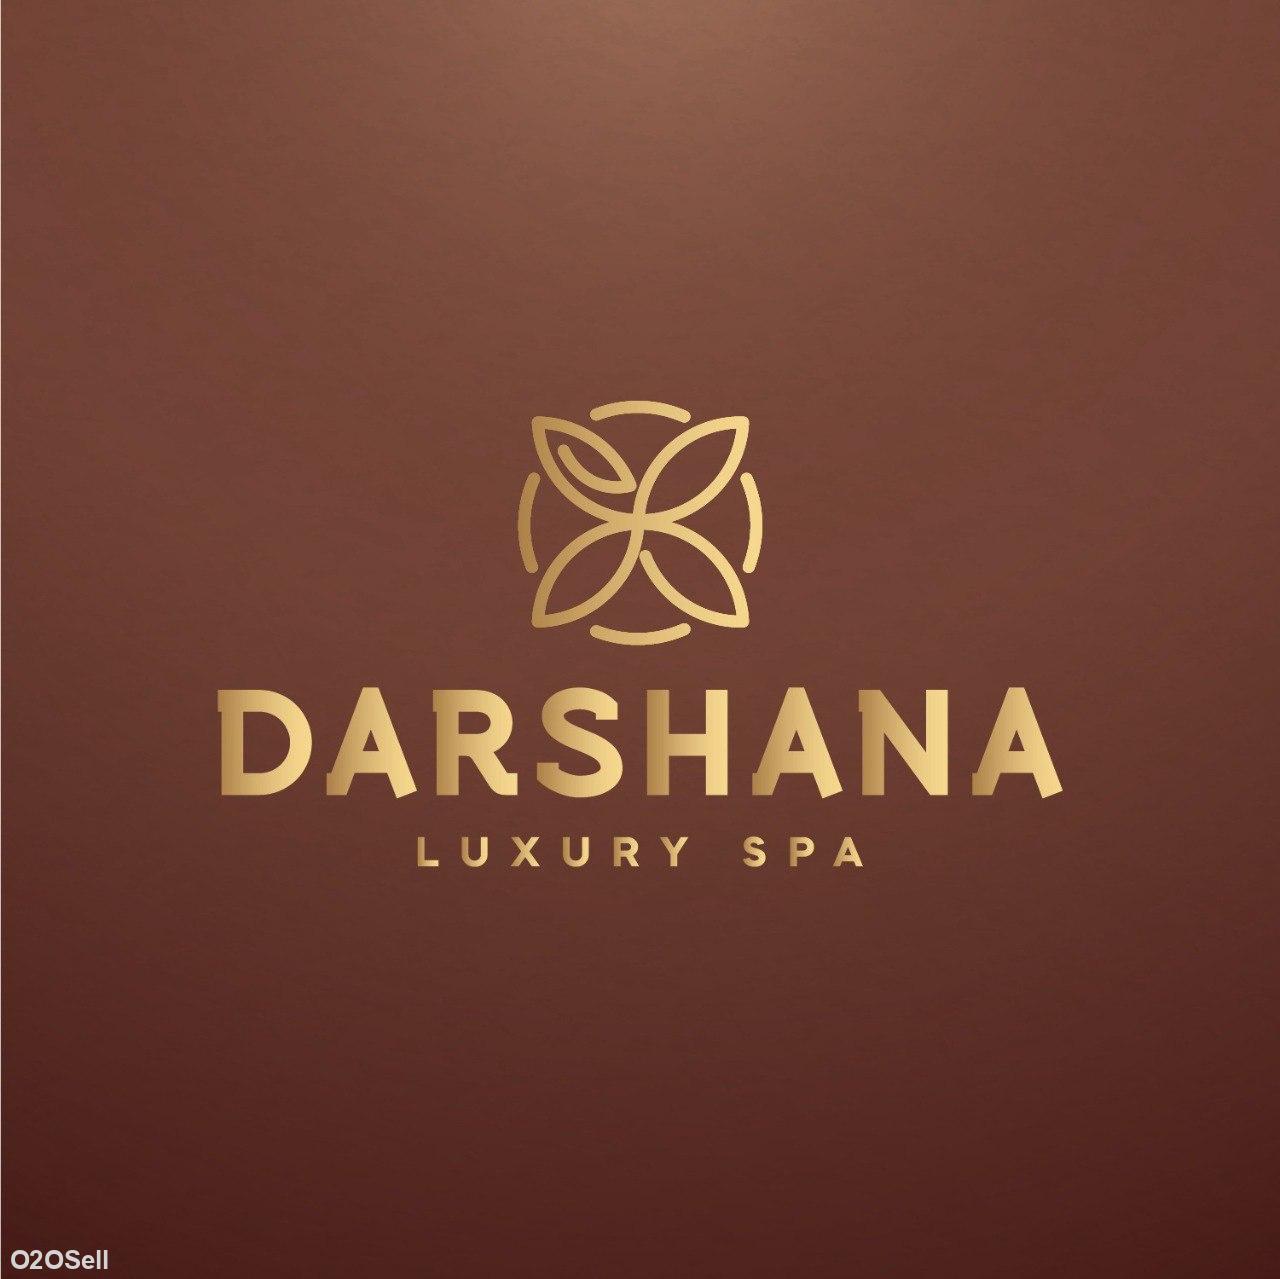 Darshana Luxury Spa - Profile Image